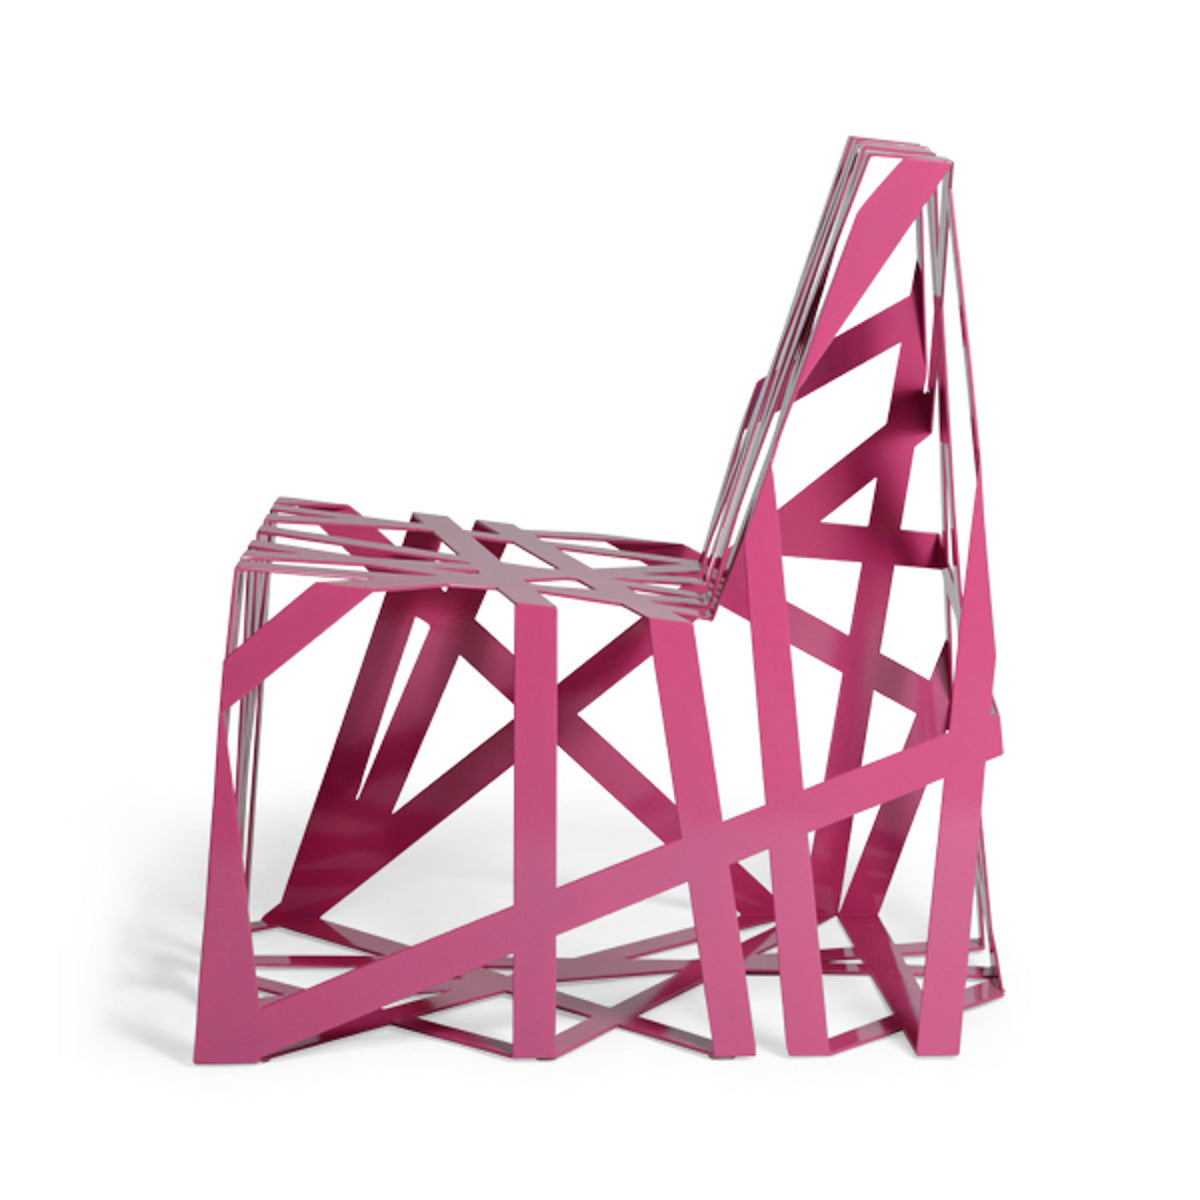 Ribbon Chair